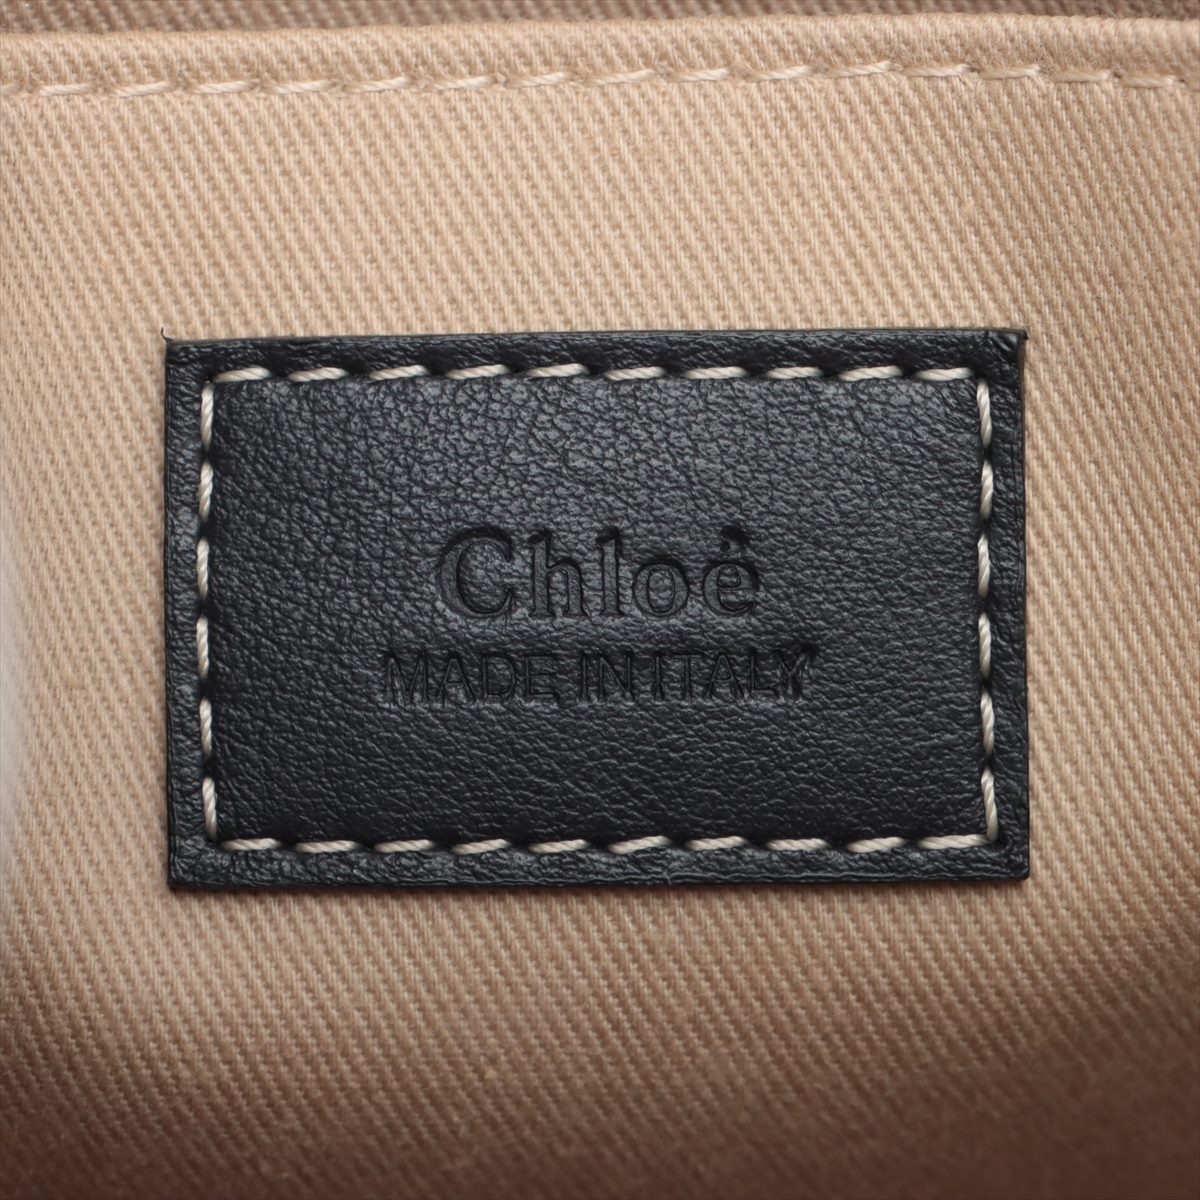 Chloe Woody Small Canvas  Leather Handbag Black or ed